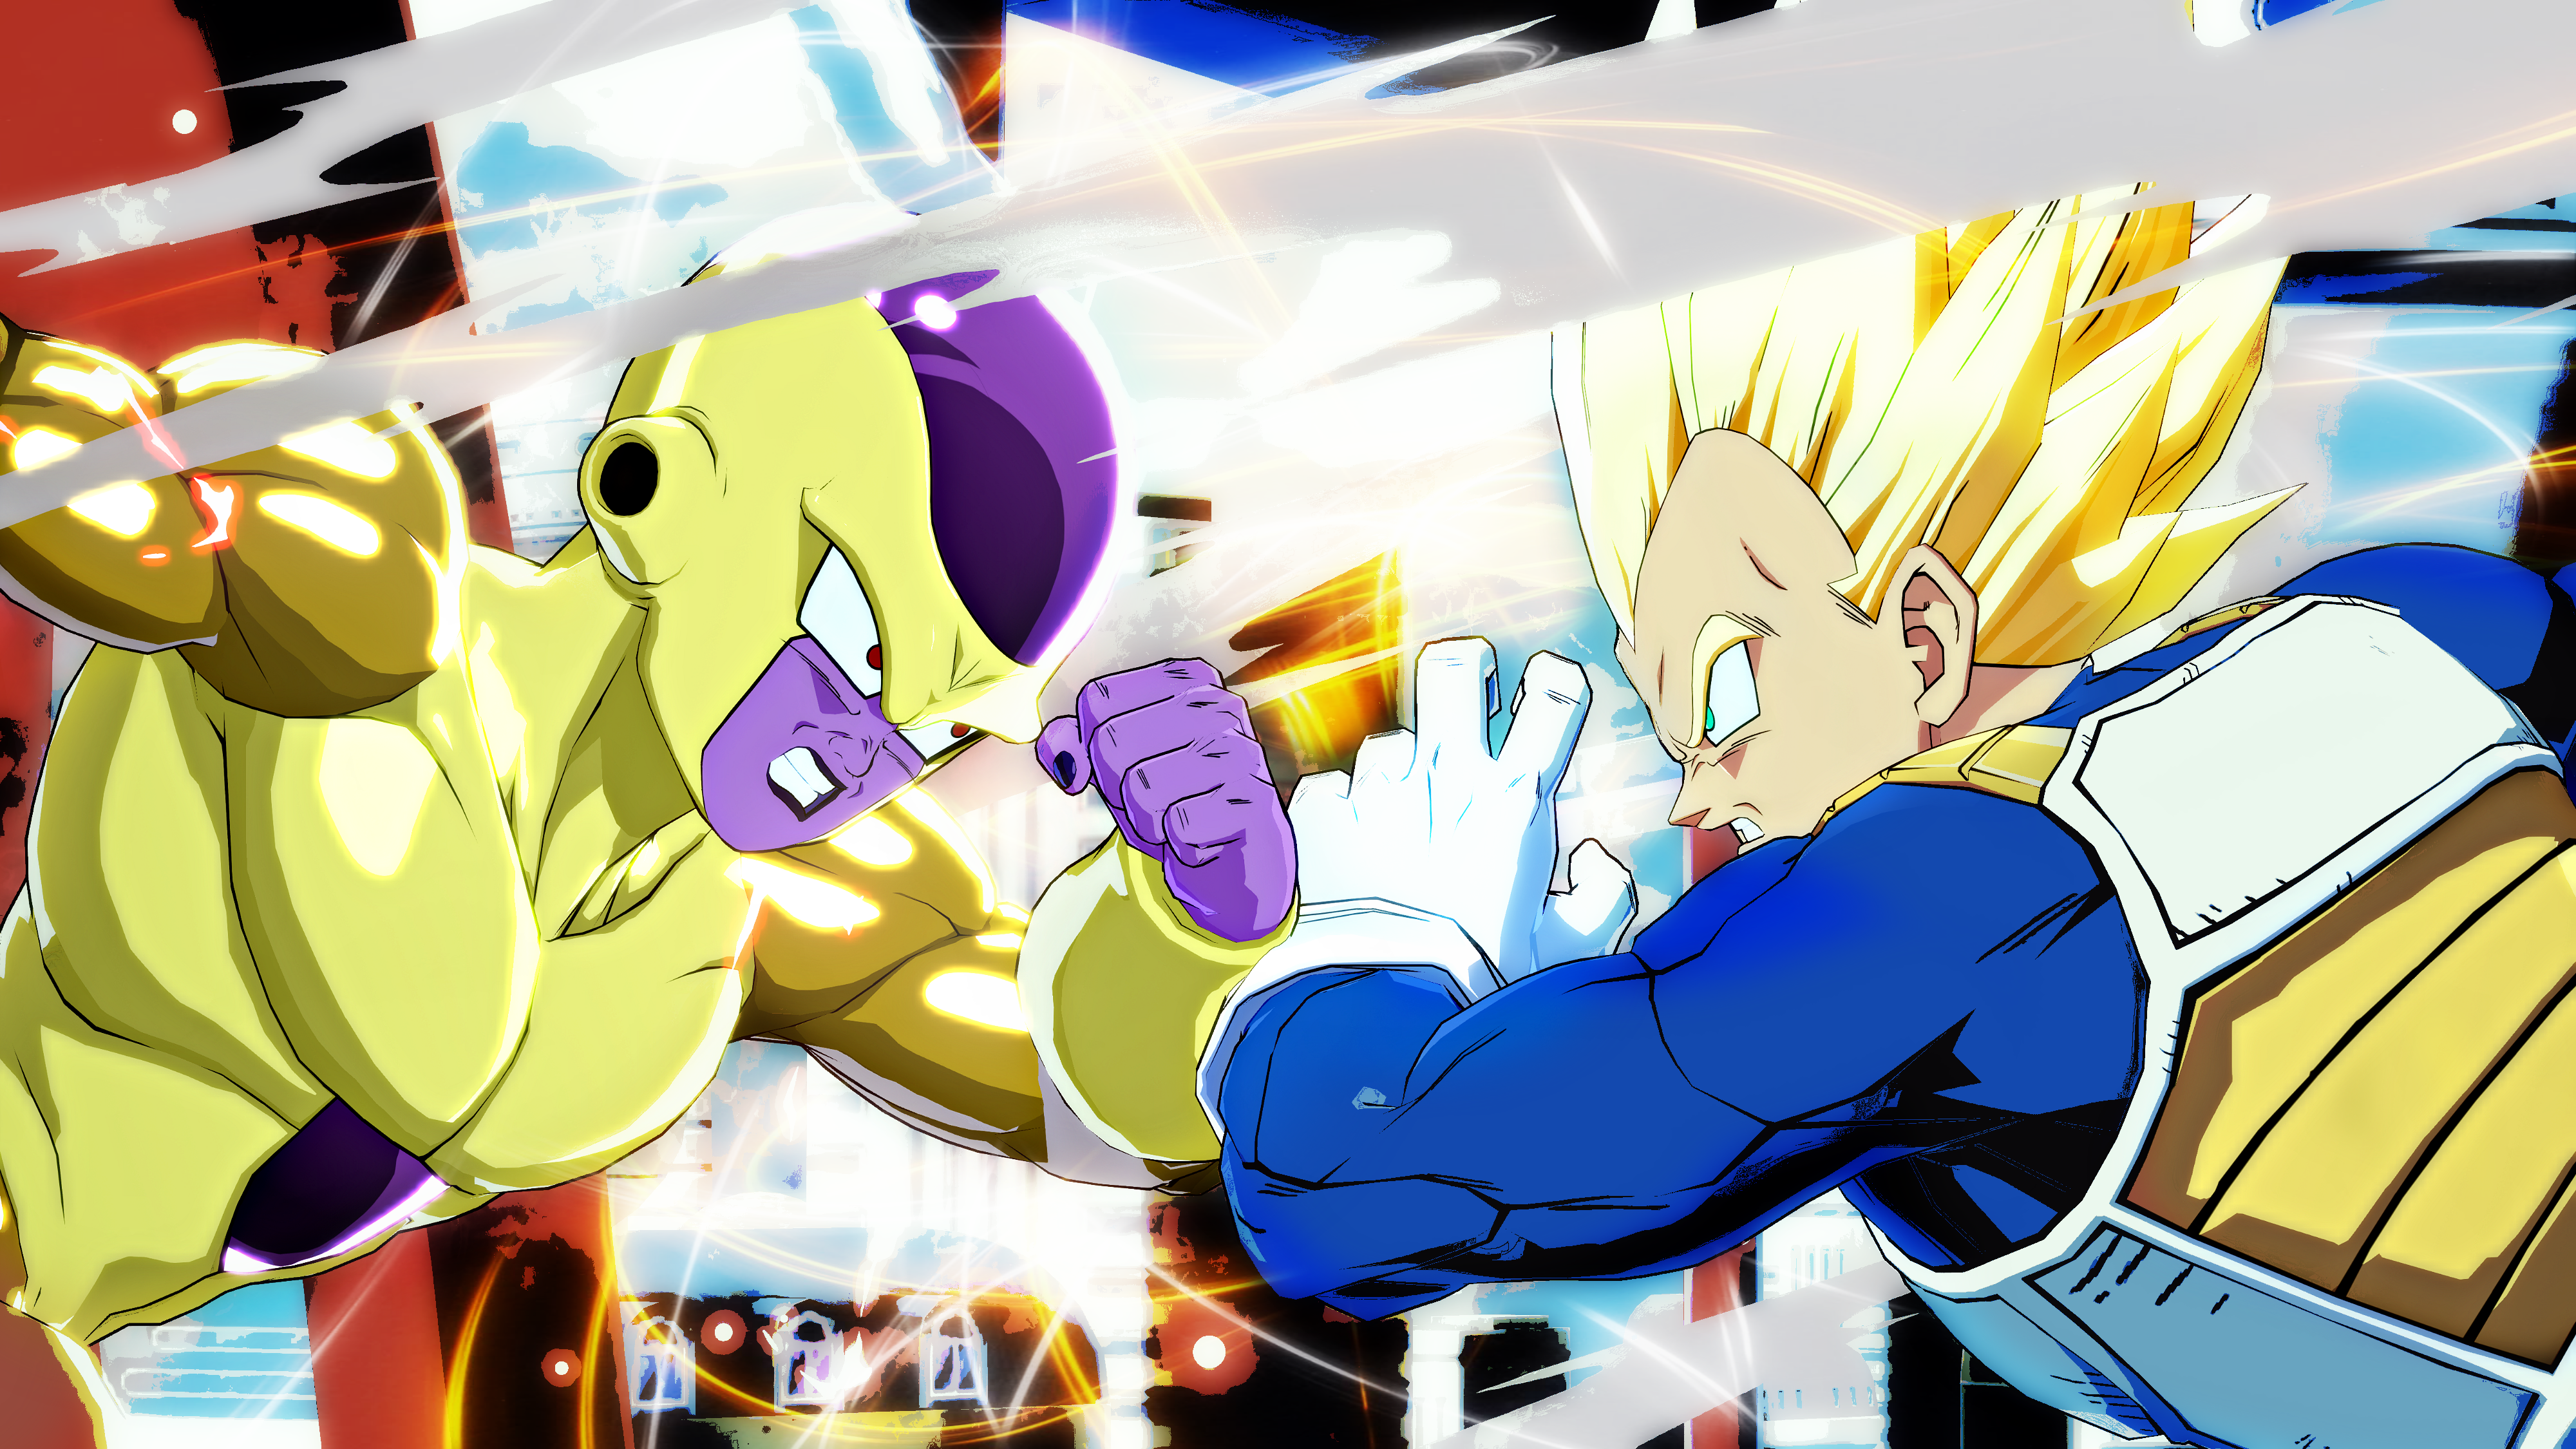 Goku And Vegeta vs Golden Freezer DBS sticknodes by Boltanim on DeviantArt